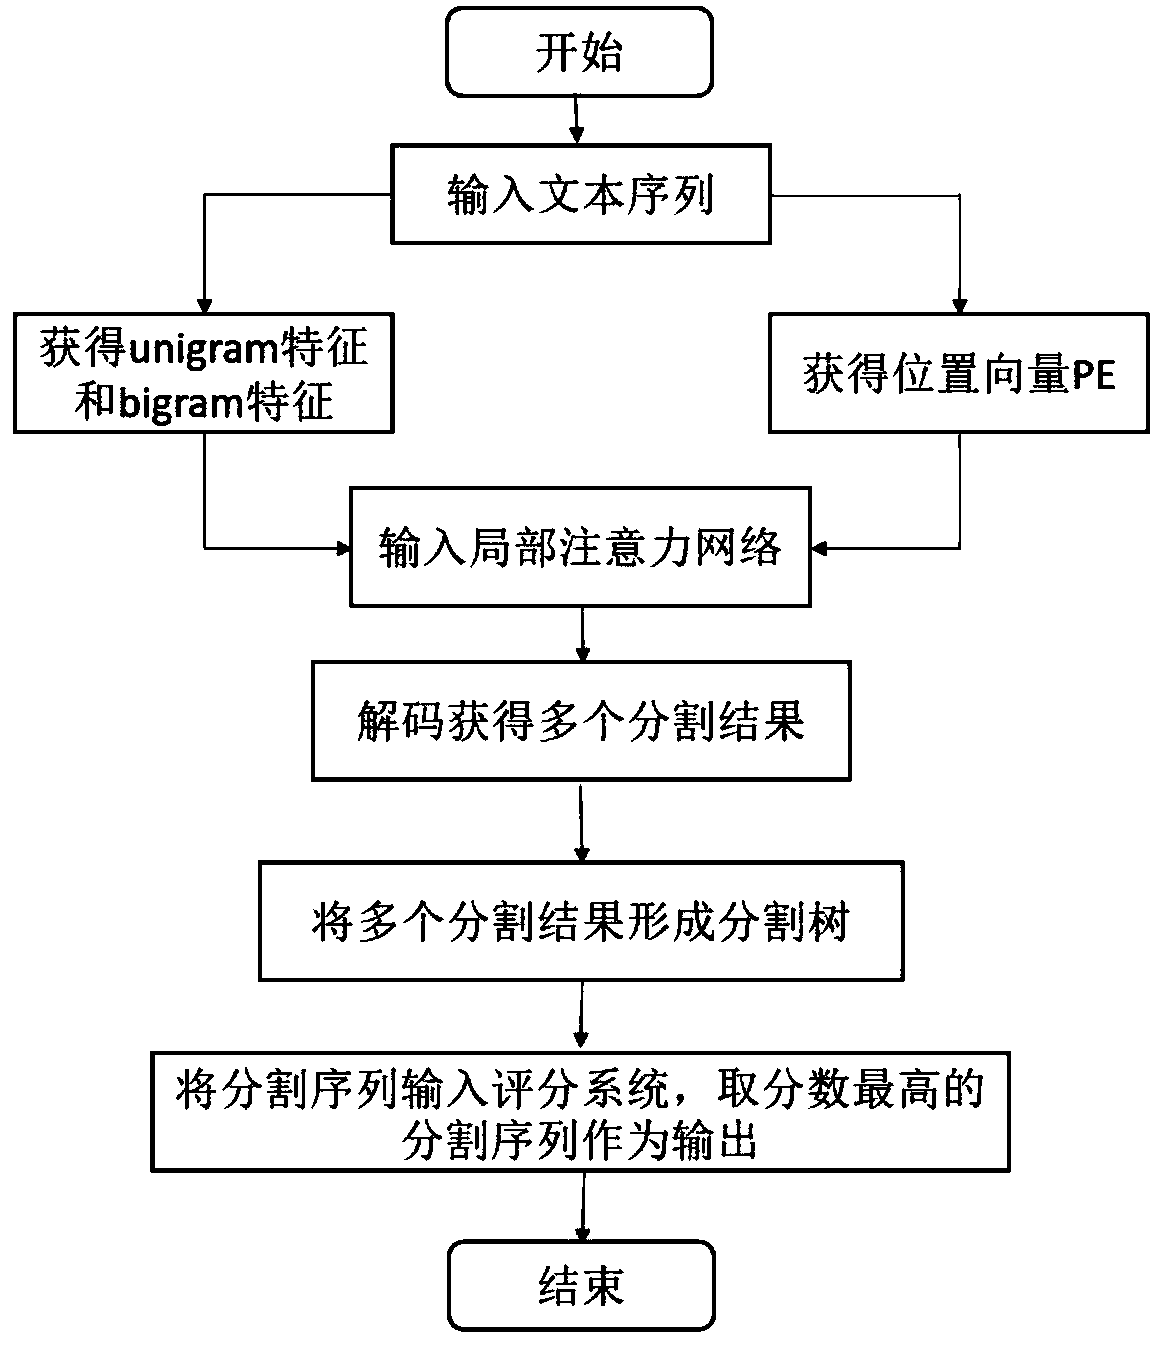 Multi-criterion Chinese word segmentation method based on local self-attention mechanism and segmentation tree